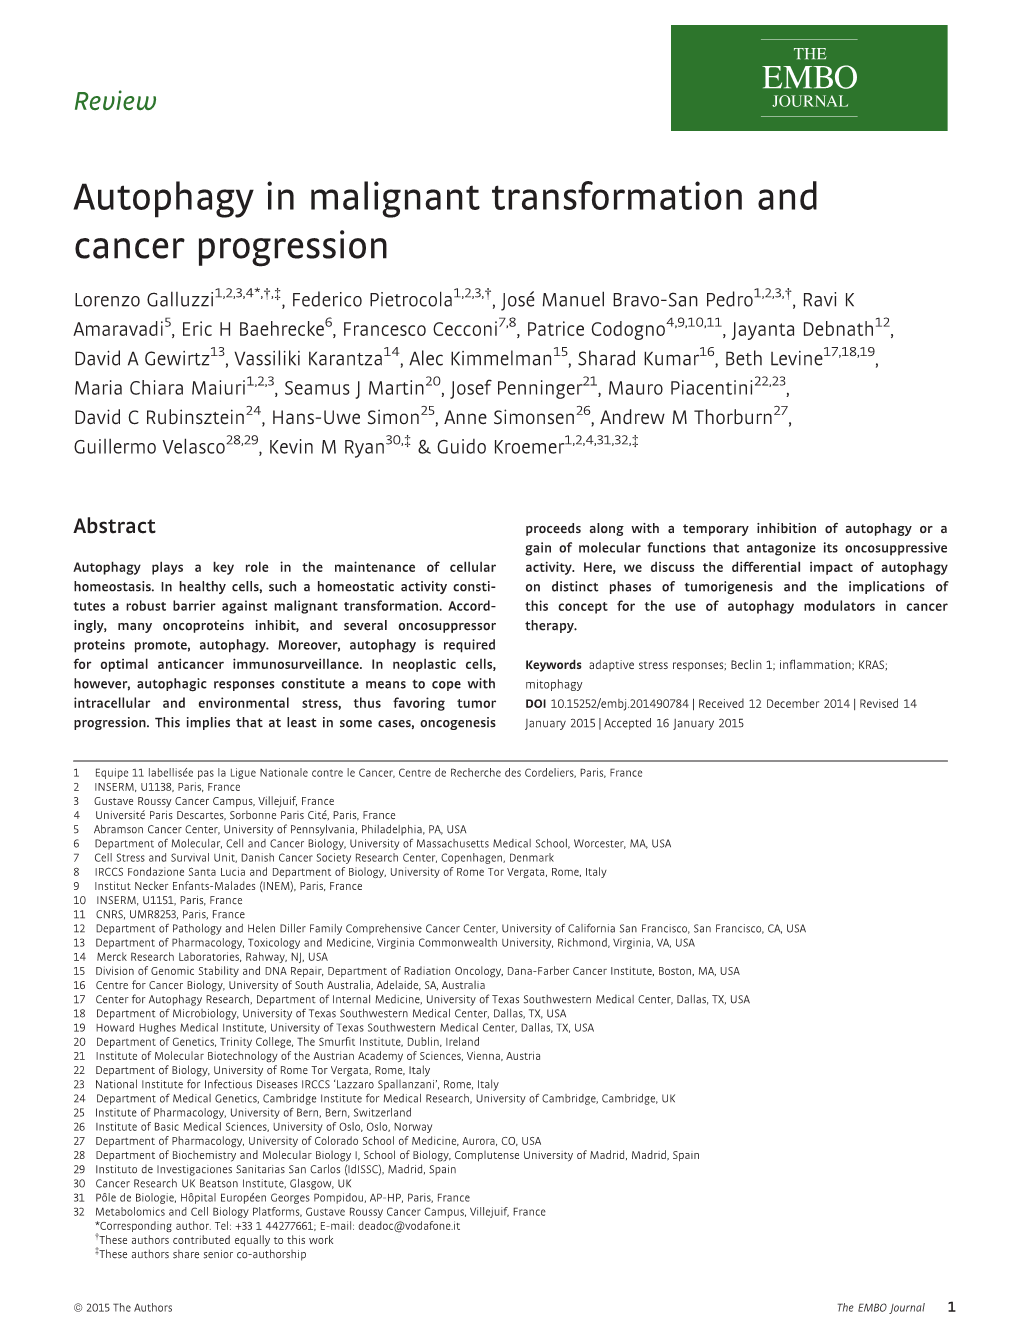 Autophagy in Malignant Transformation and Cancer Progression